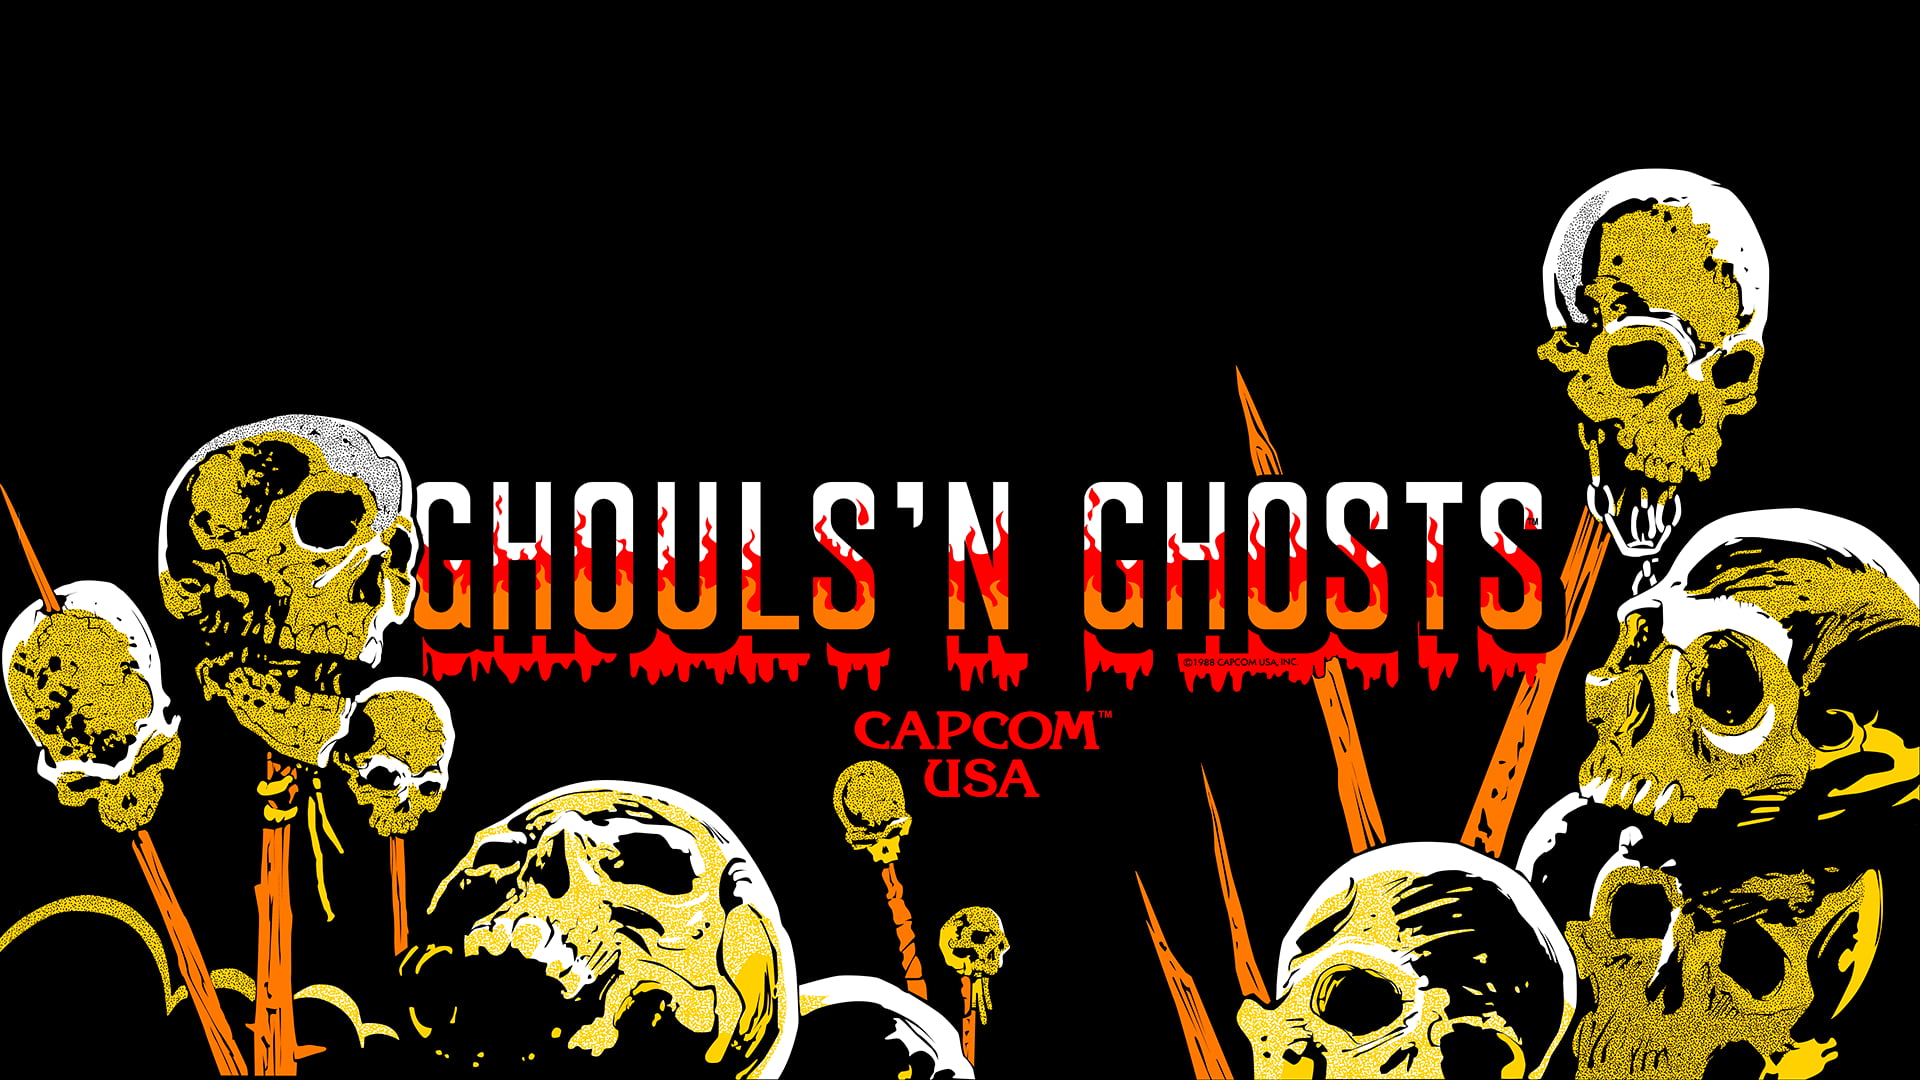 video games, arcade machine, Ghouls 'n Ghosts, Capcom, skull